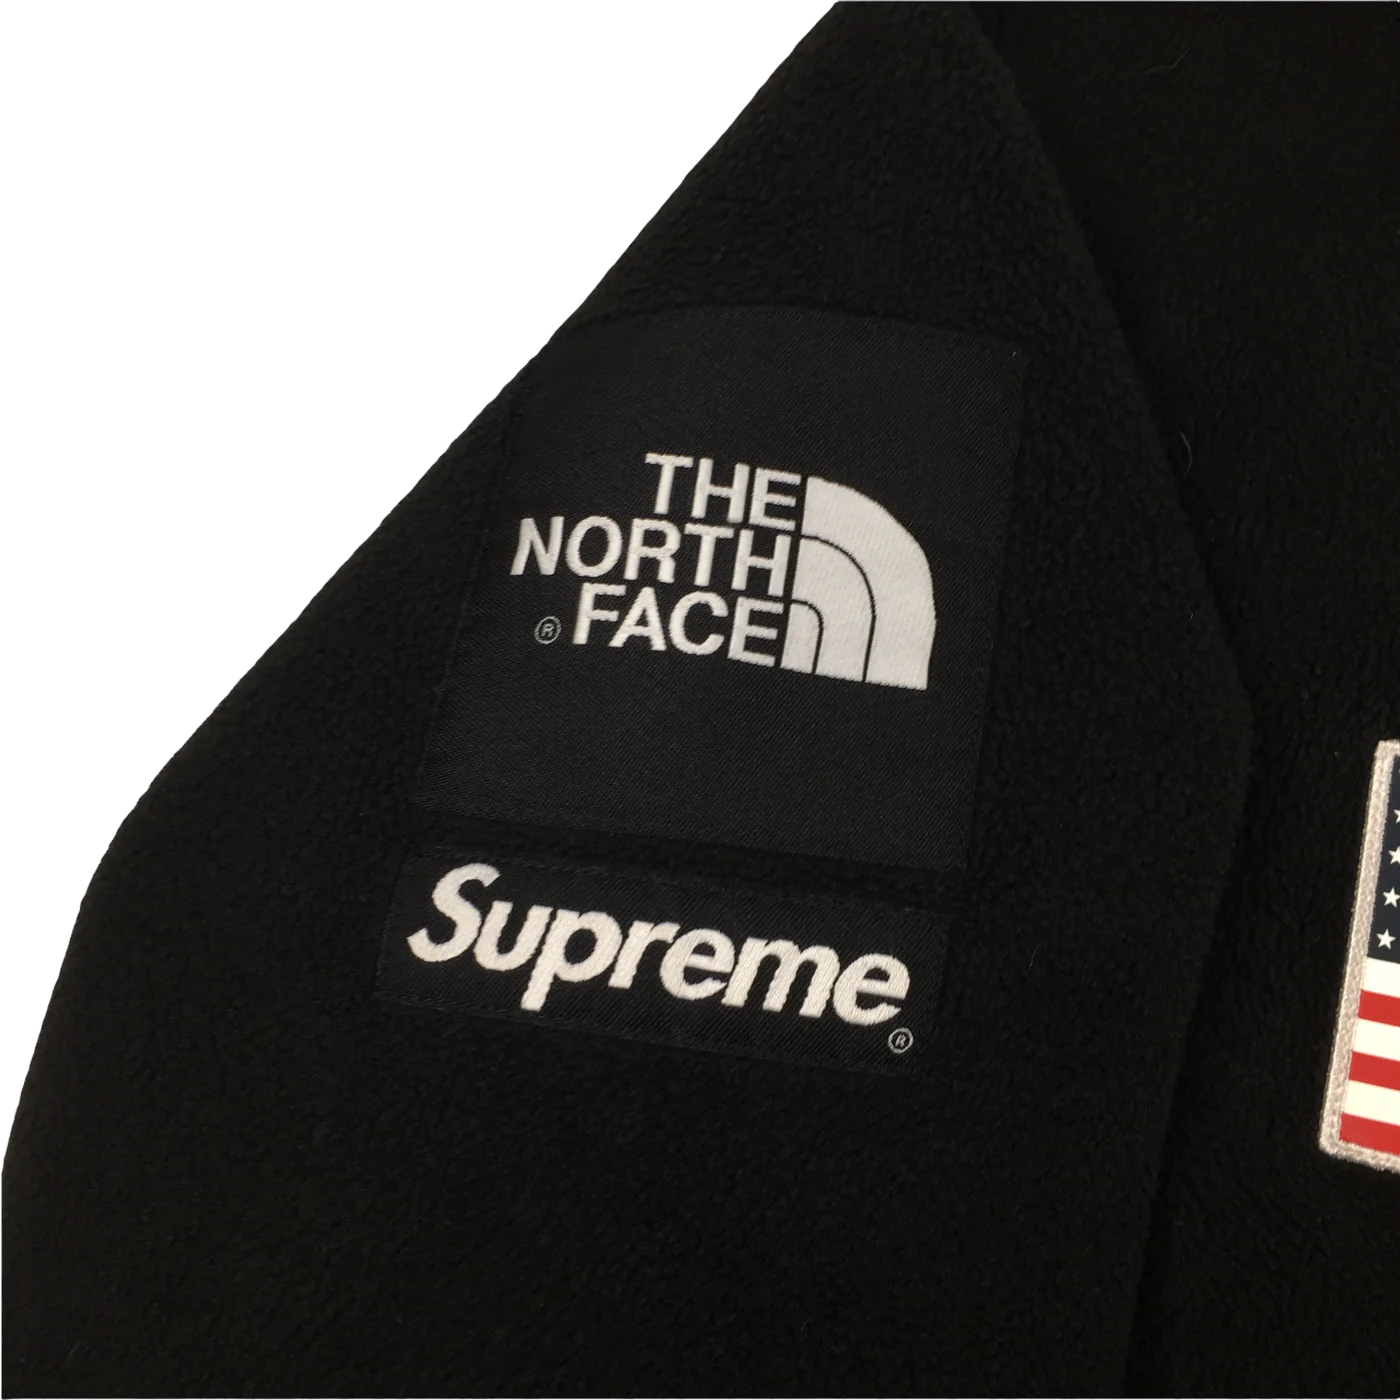 2017 Supreme x The North Face Black Antarctica Fleece